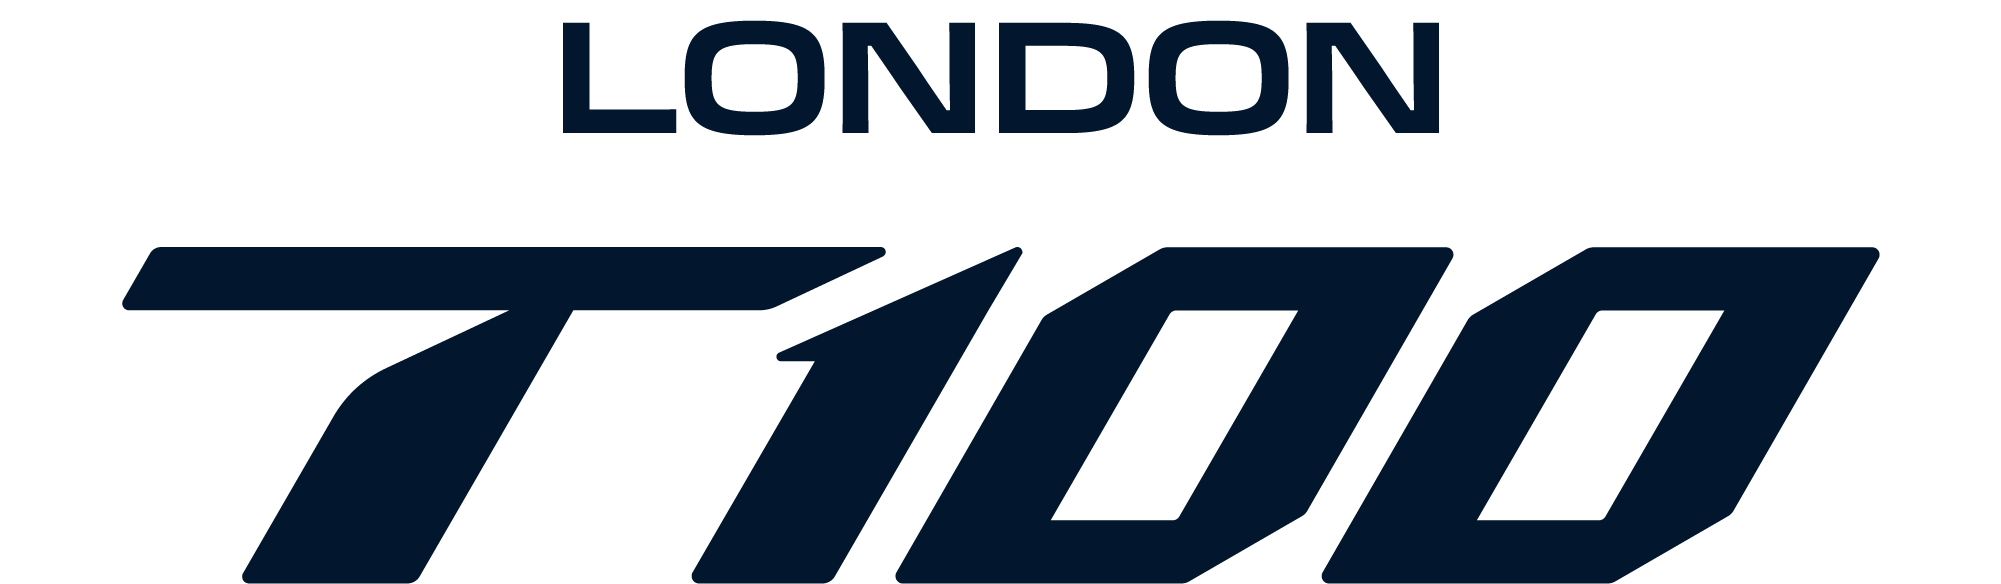 London T100 - Sprint